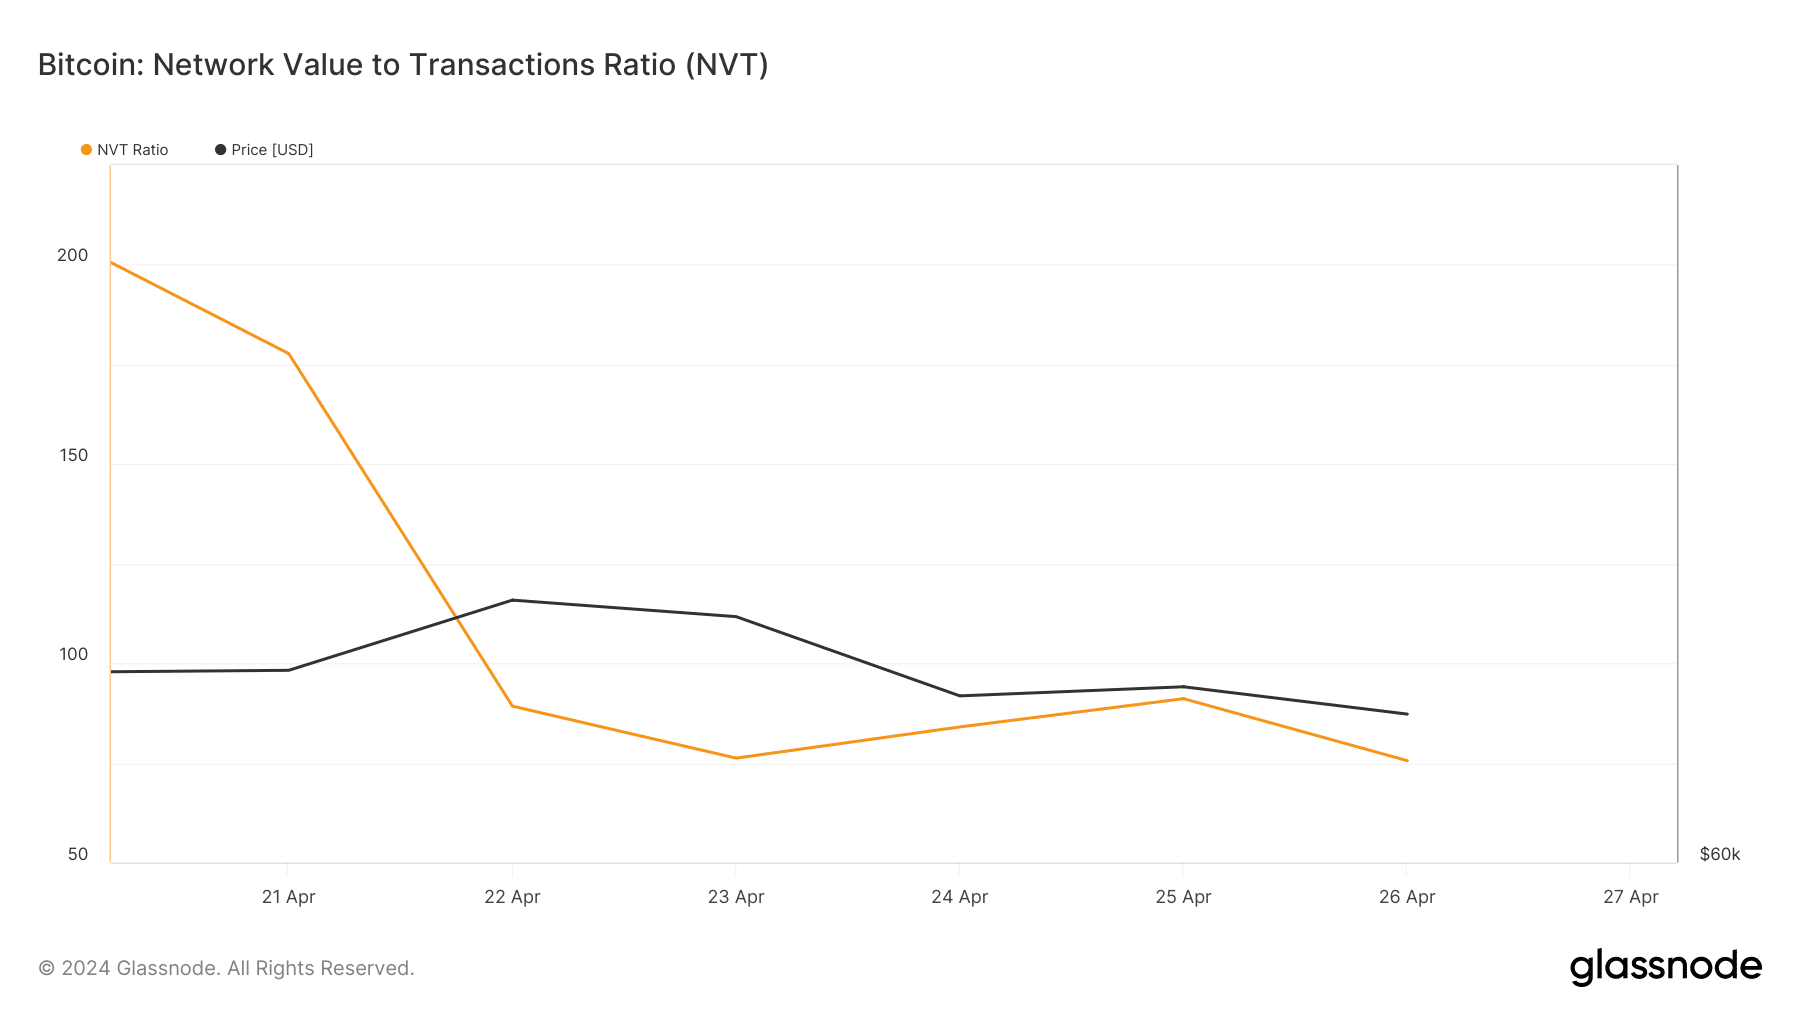 BTC's NVT ratio has decreased